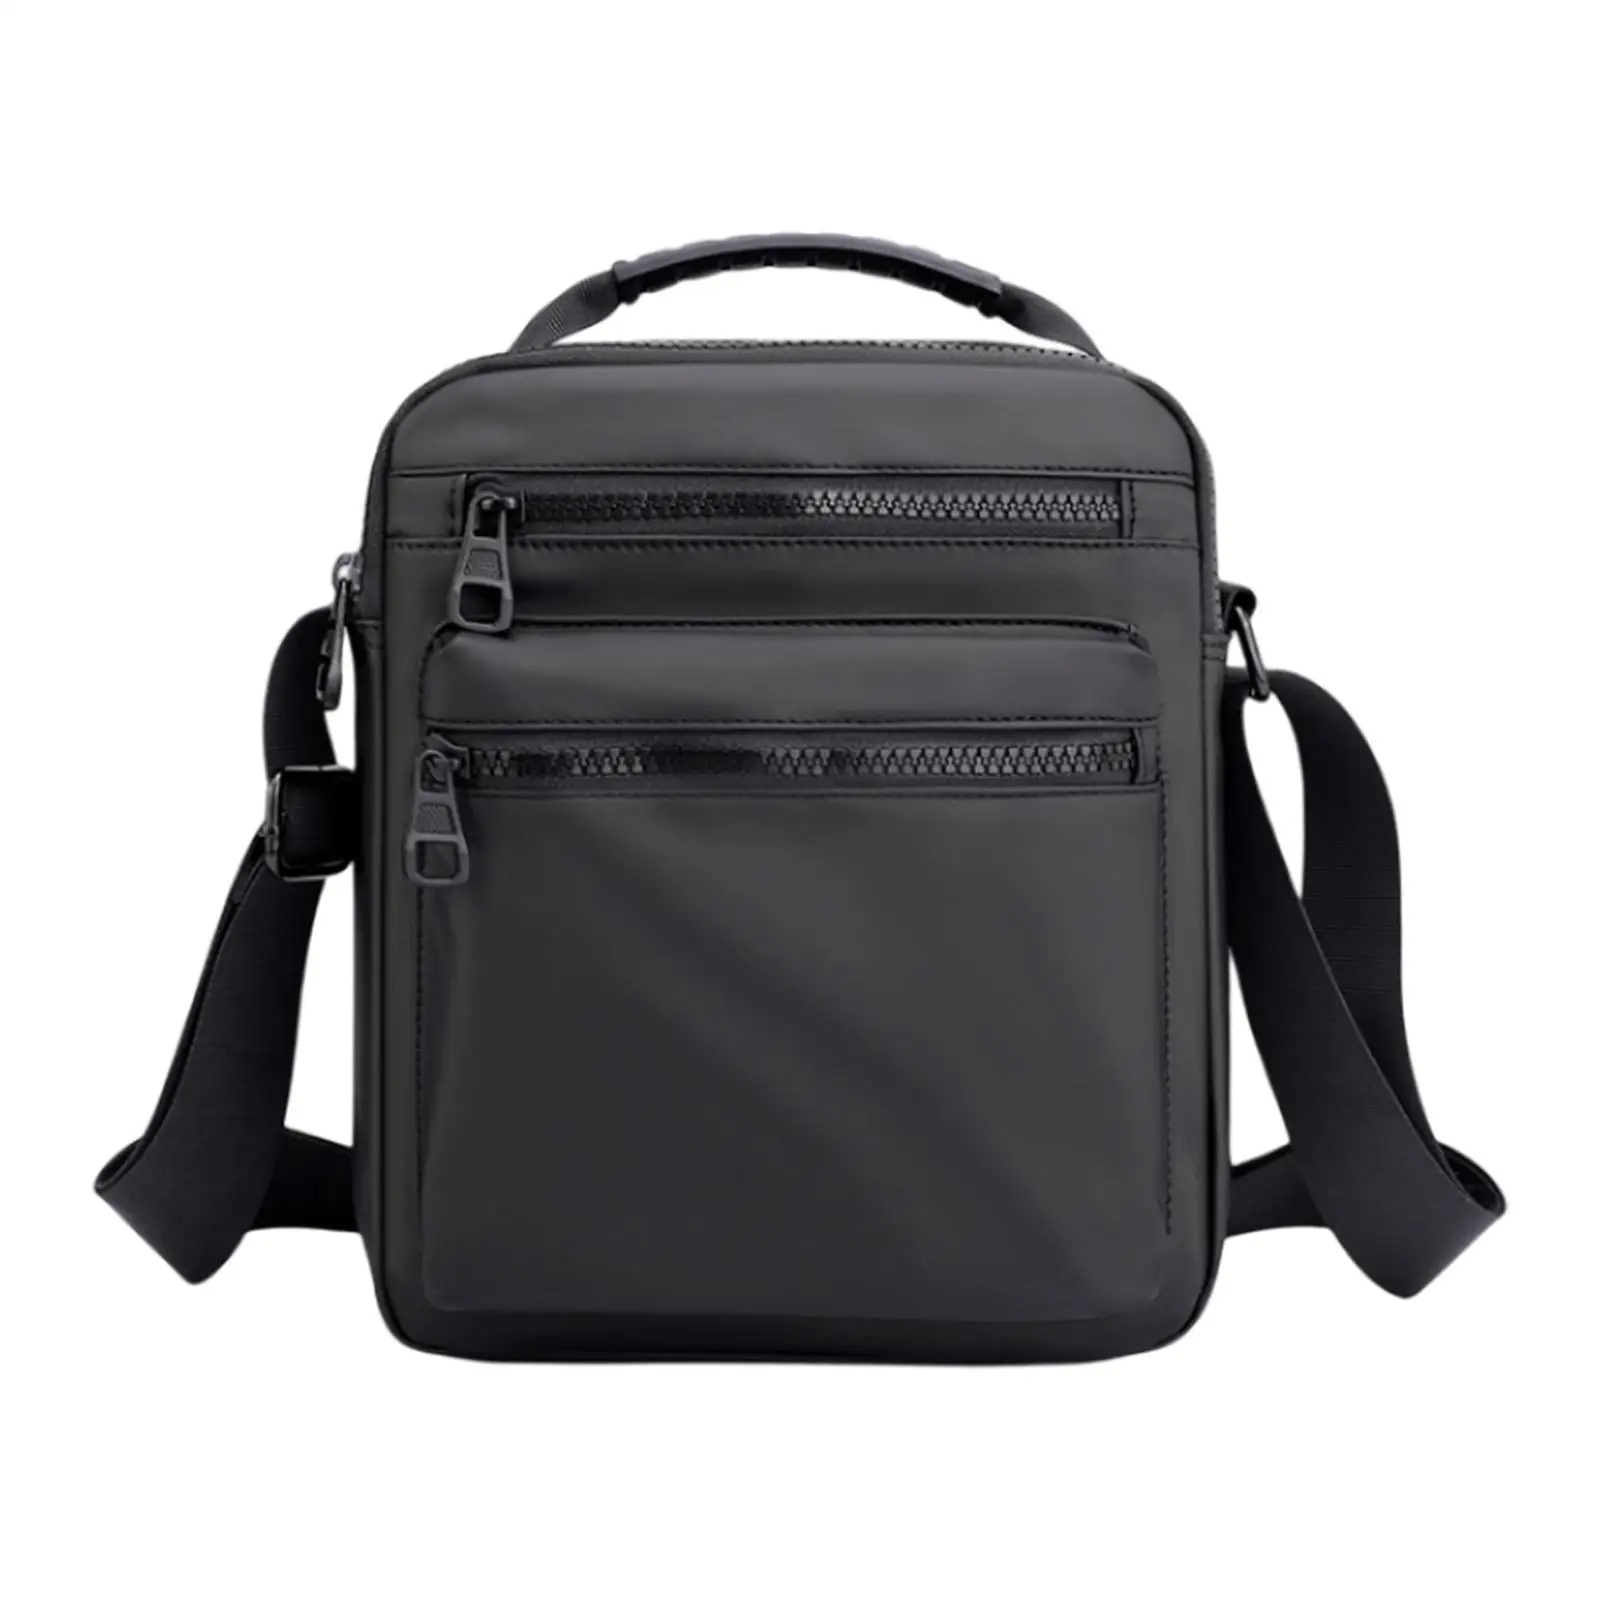 Men`s Messenger Bag Shoulder Sling Pack Handbag Gift for Family Friends Satchel Bag for Daily Use Traveling Work Cycling Camping